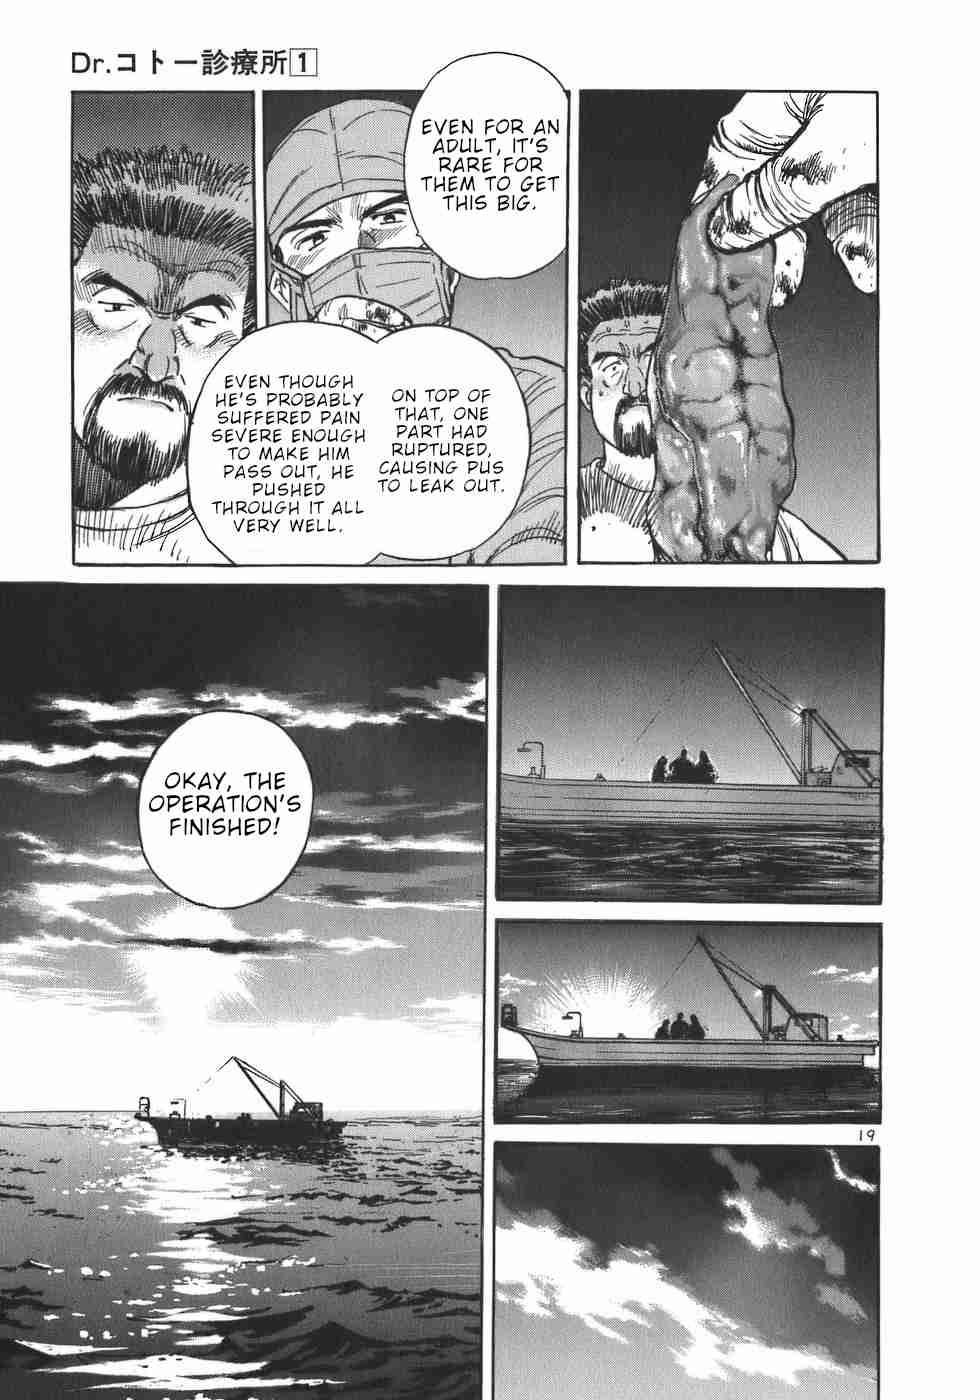 Dr. Koto Shinryoujo Vol. 1 Ch. 2 Dr. Koto Rides the Boat Again